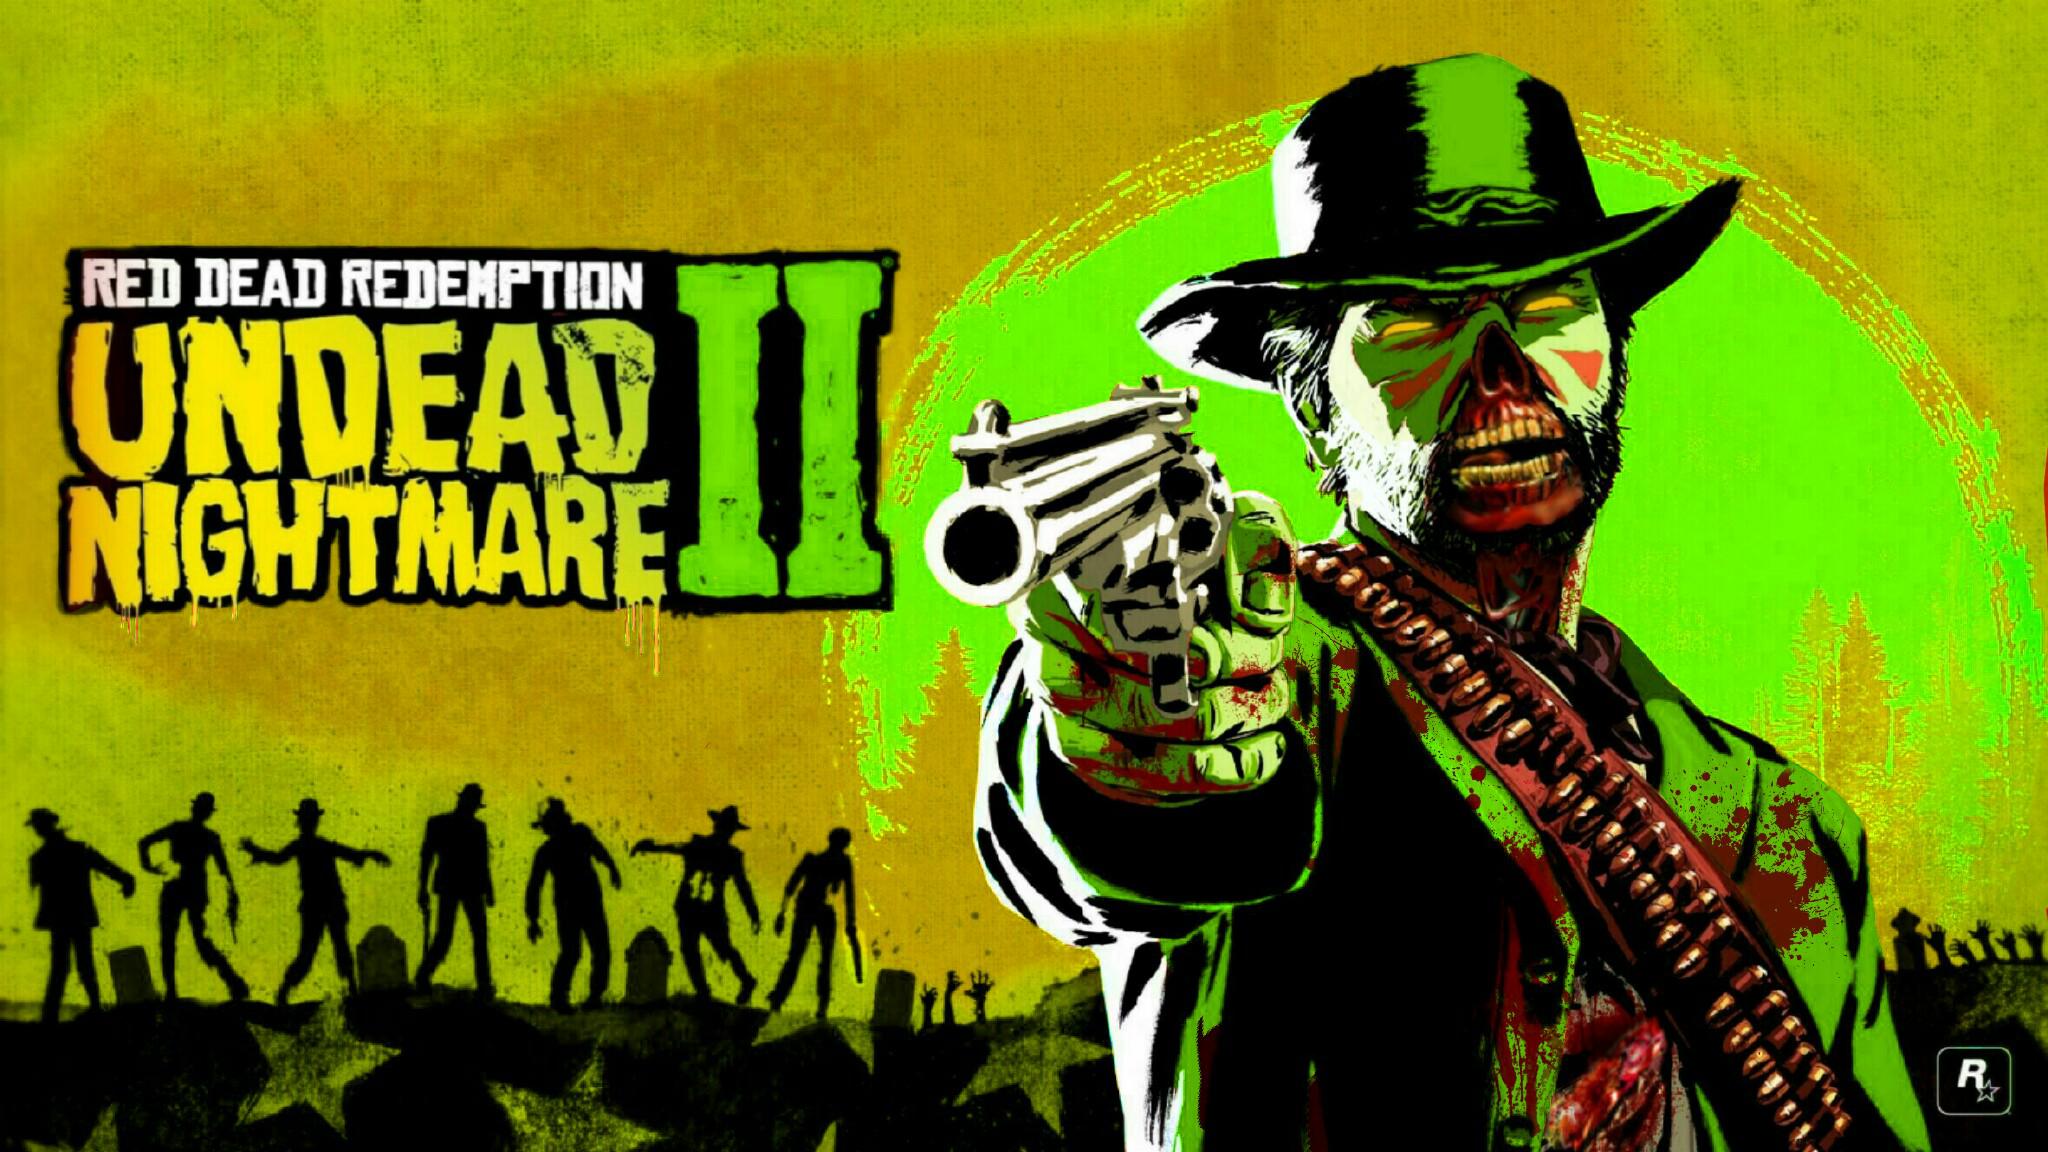 Red Dead Redemption Undead Nightmare 2 .reddit.com